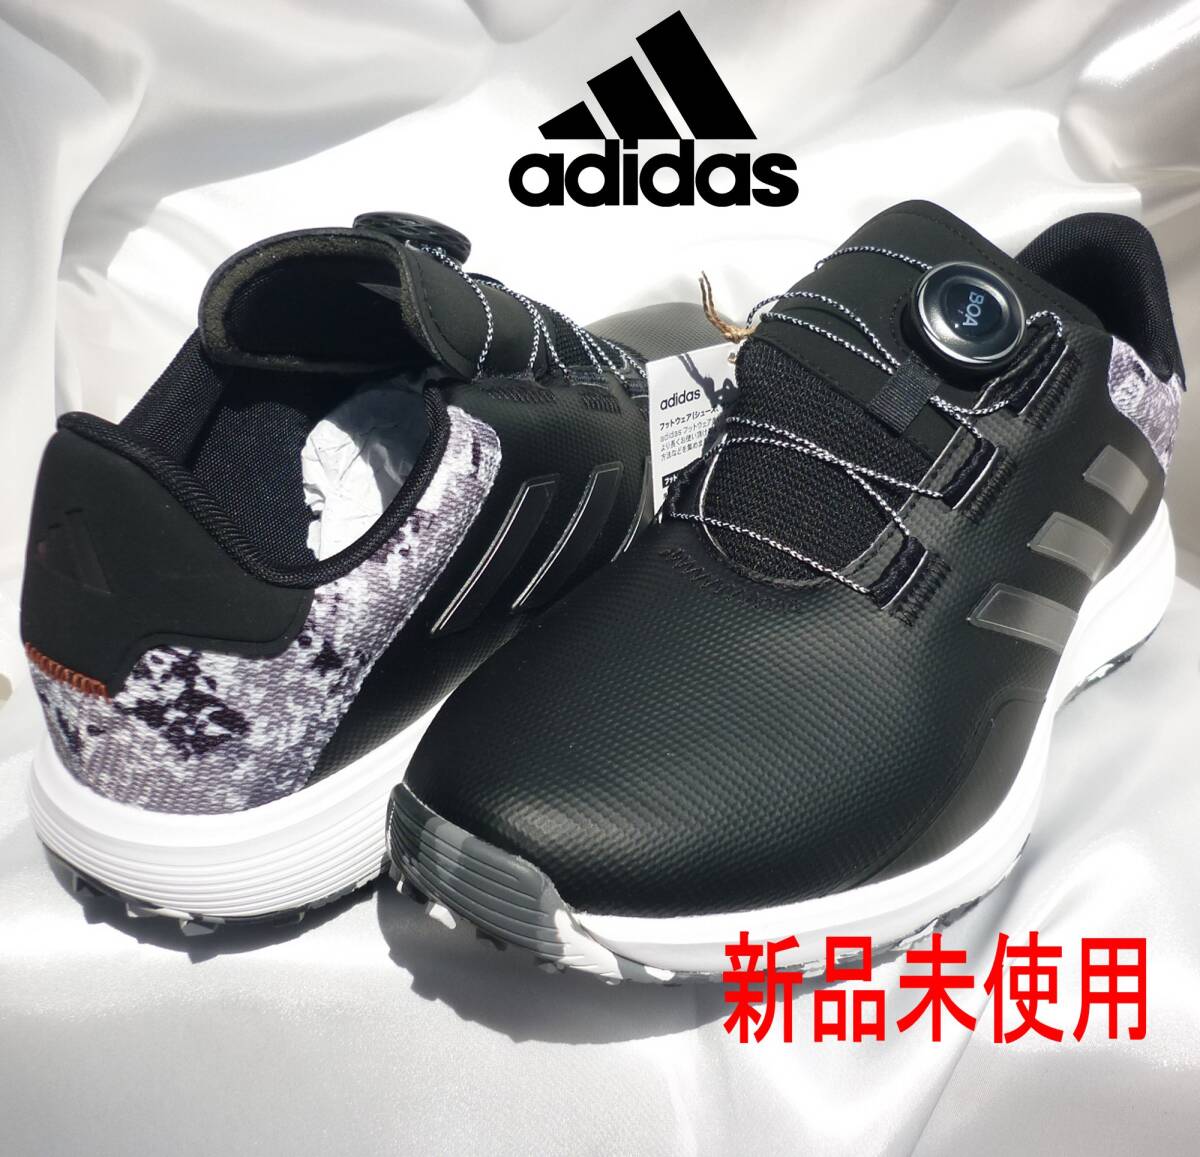  new goods regular goods free shipping *26cm Adidas boa dial black men's golf shoes wide width spike less waterproof 